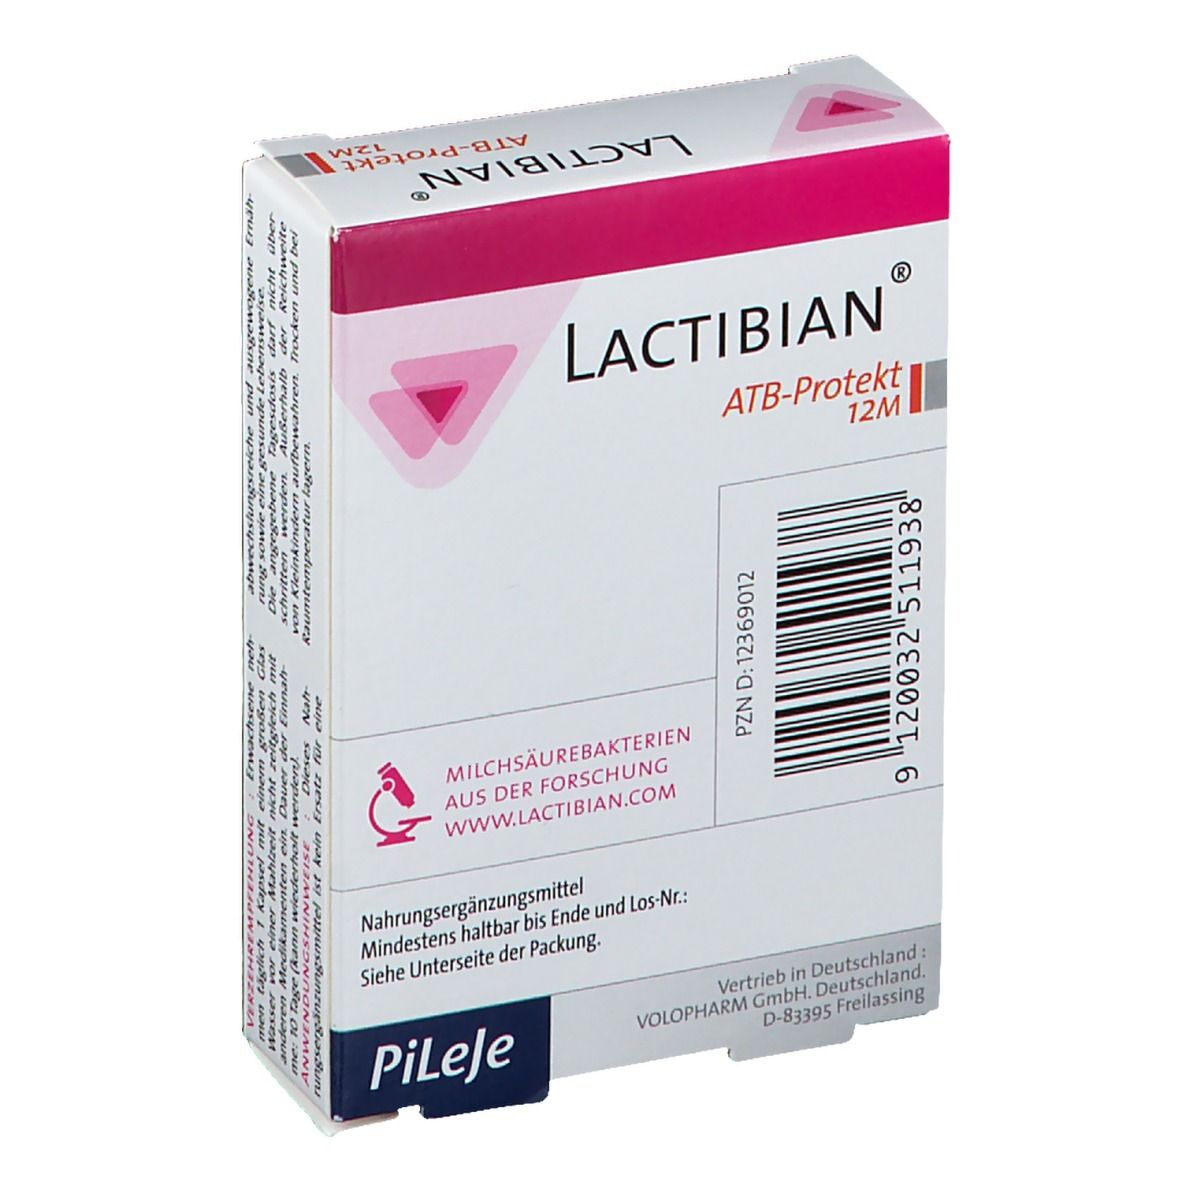 Lactibian® ATB-Protekt 12M